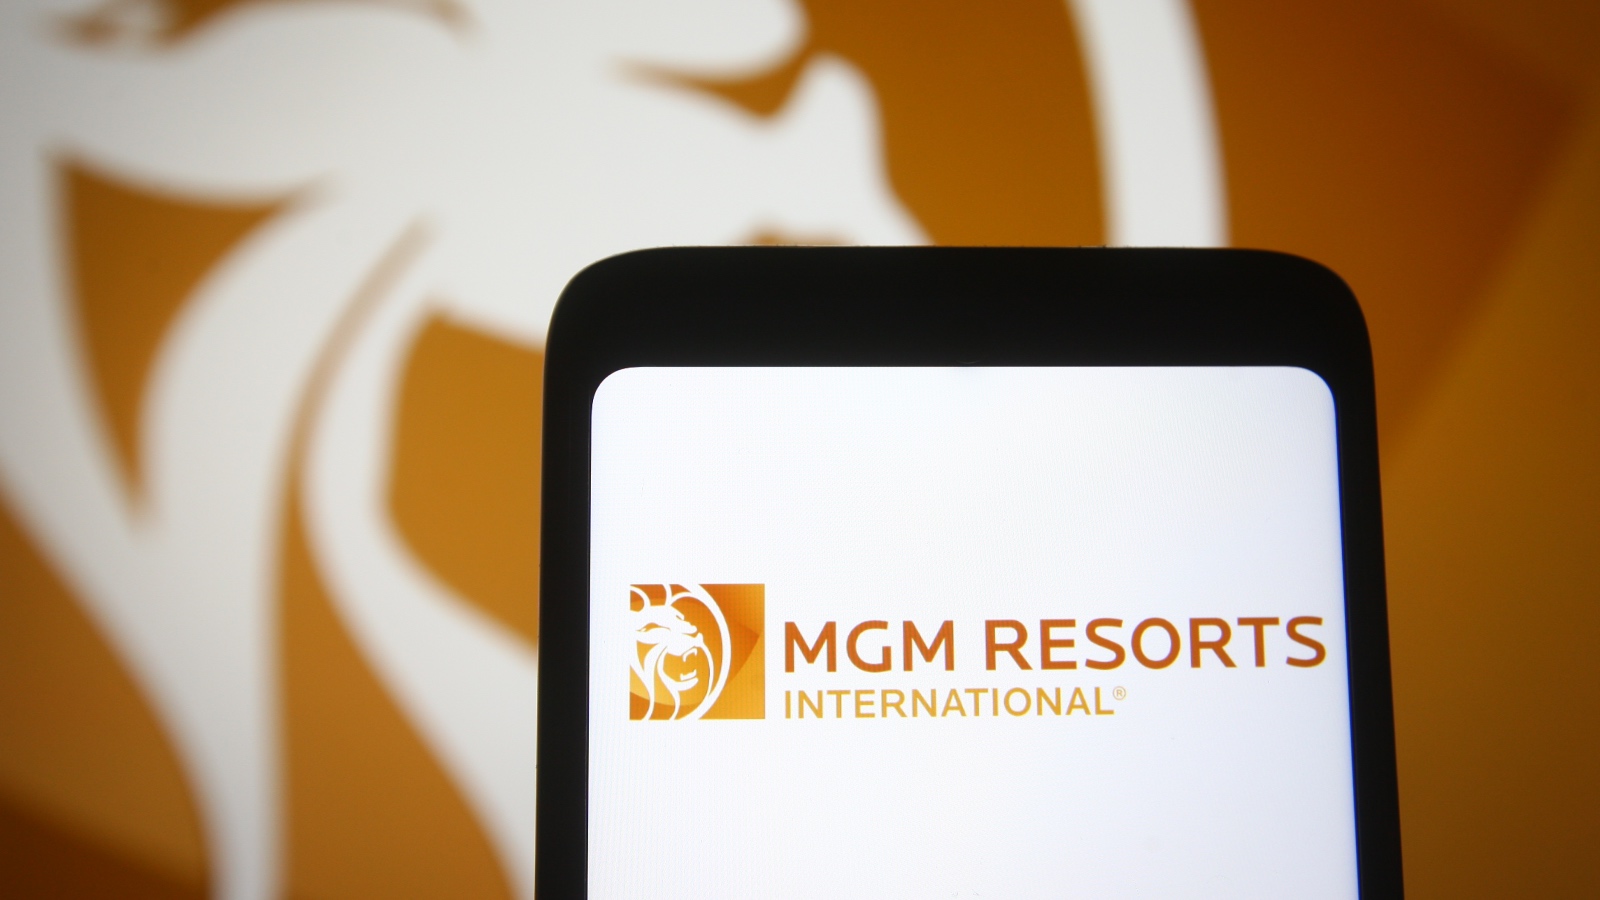 MGM Resorts International logo on a cellphone